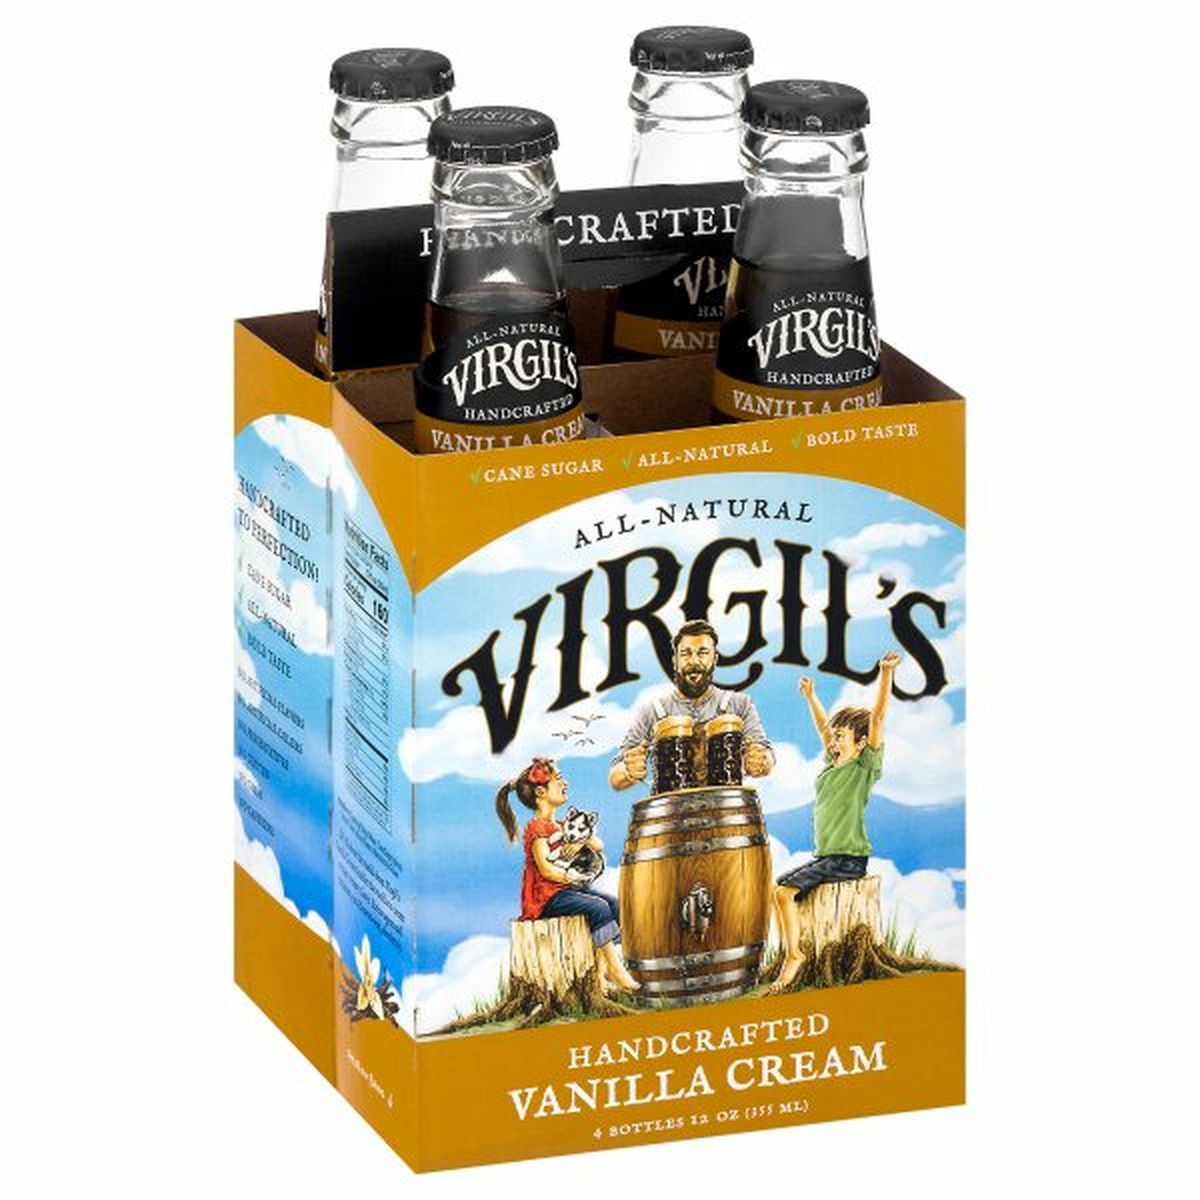 Calories in Virgil's Soda, Vanilla Cream, Handcrafted